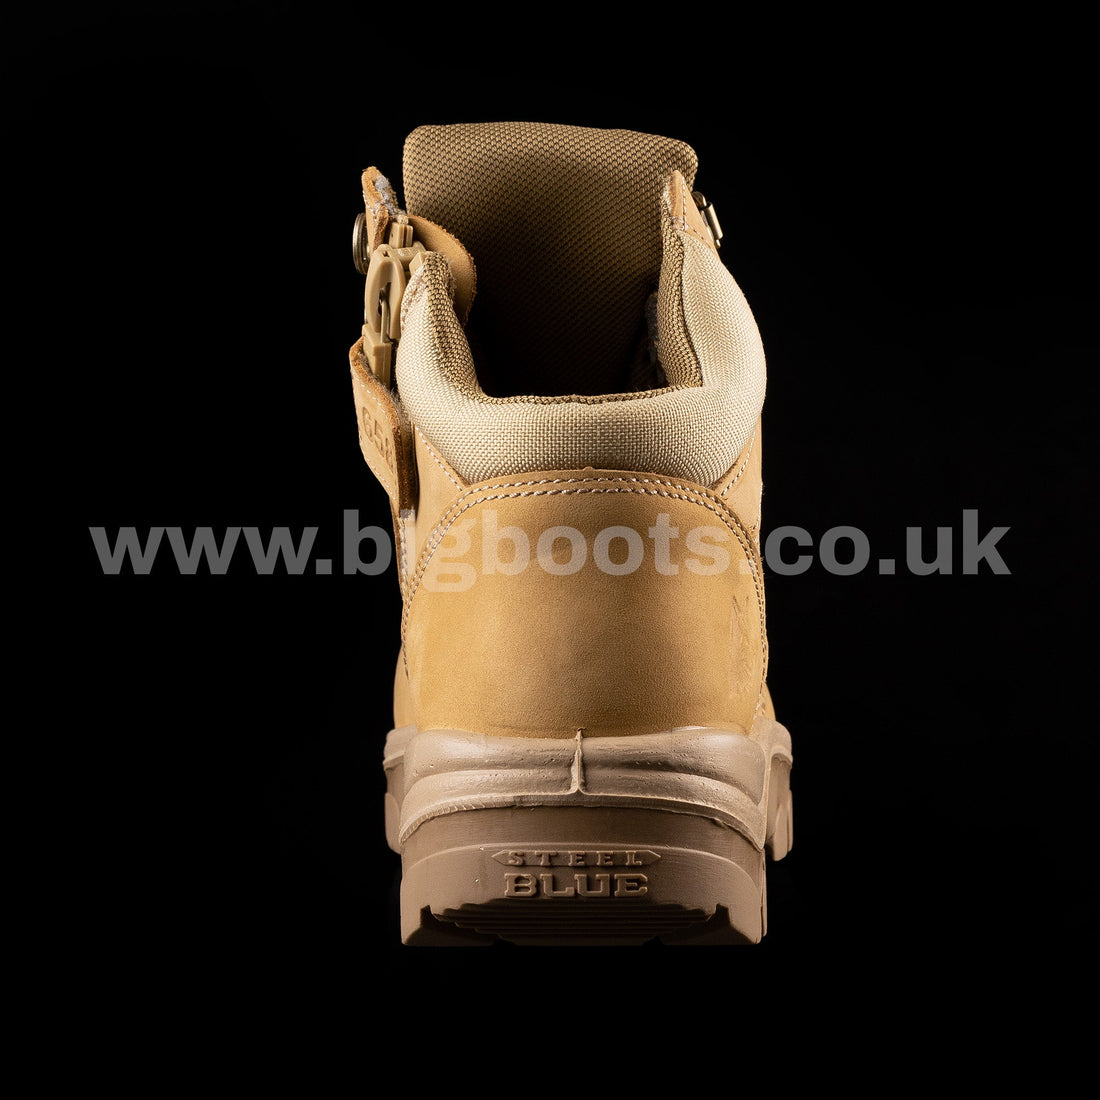 BIG Boots UK - Australian Workwear and Work Boots